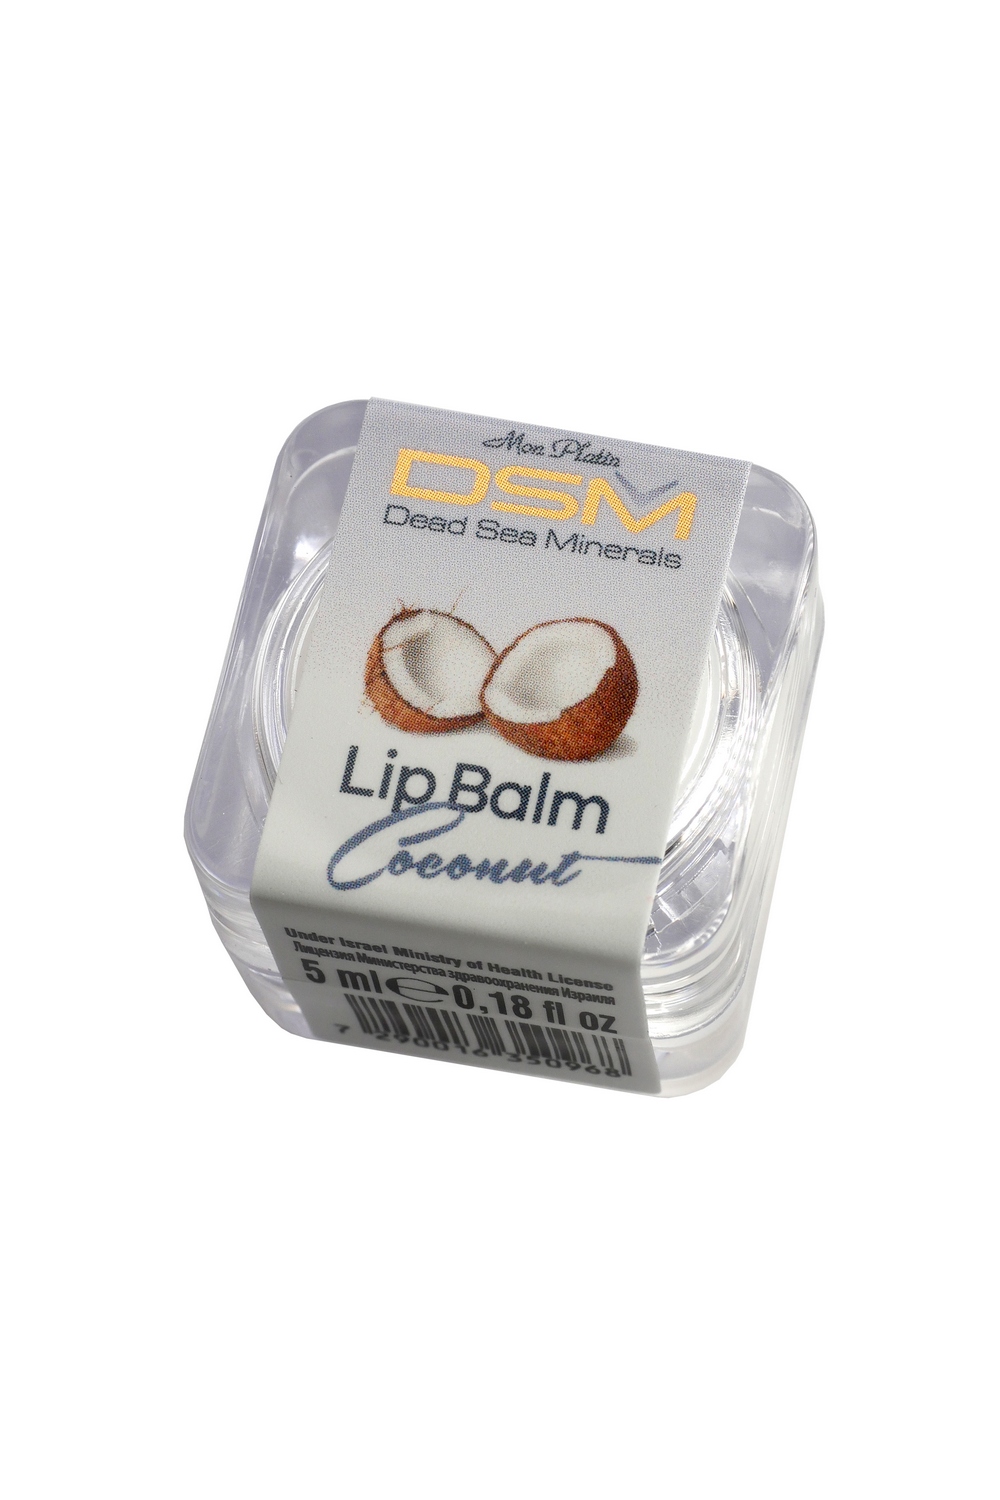 Lip Balm Coconut butter